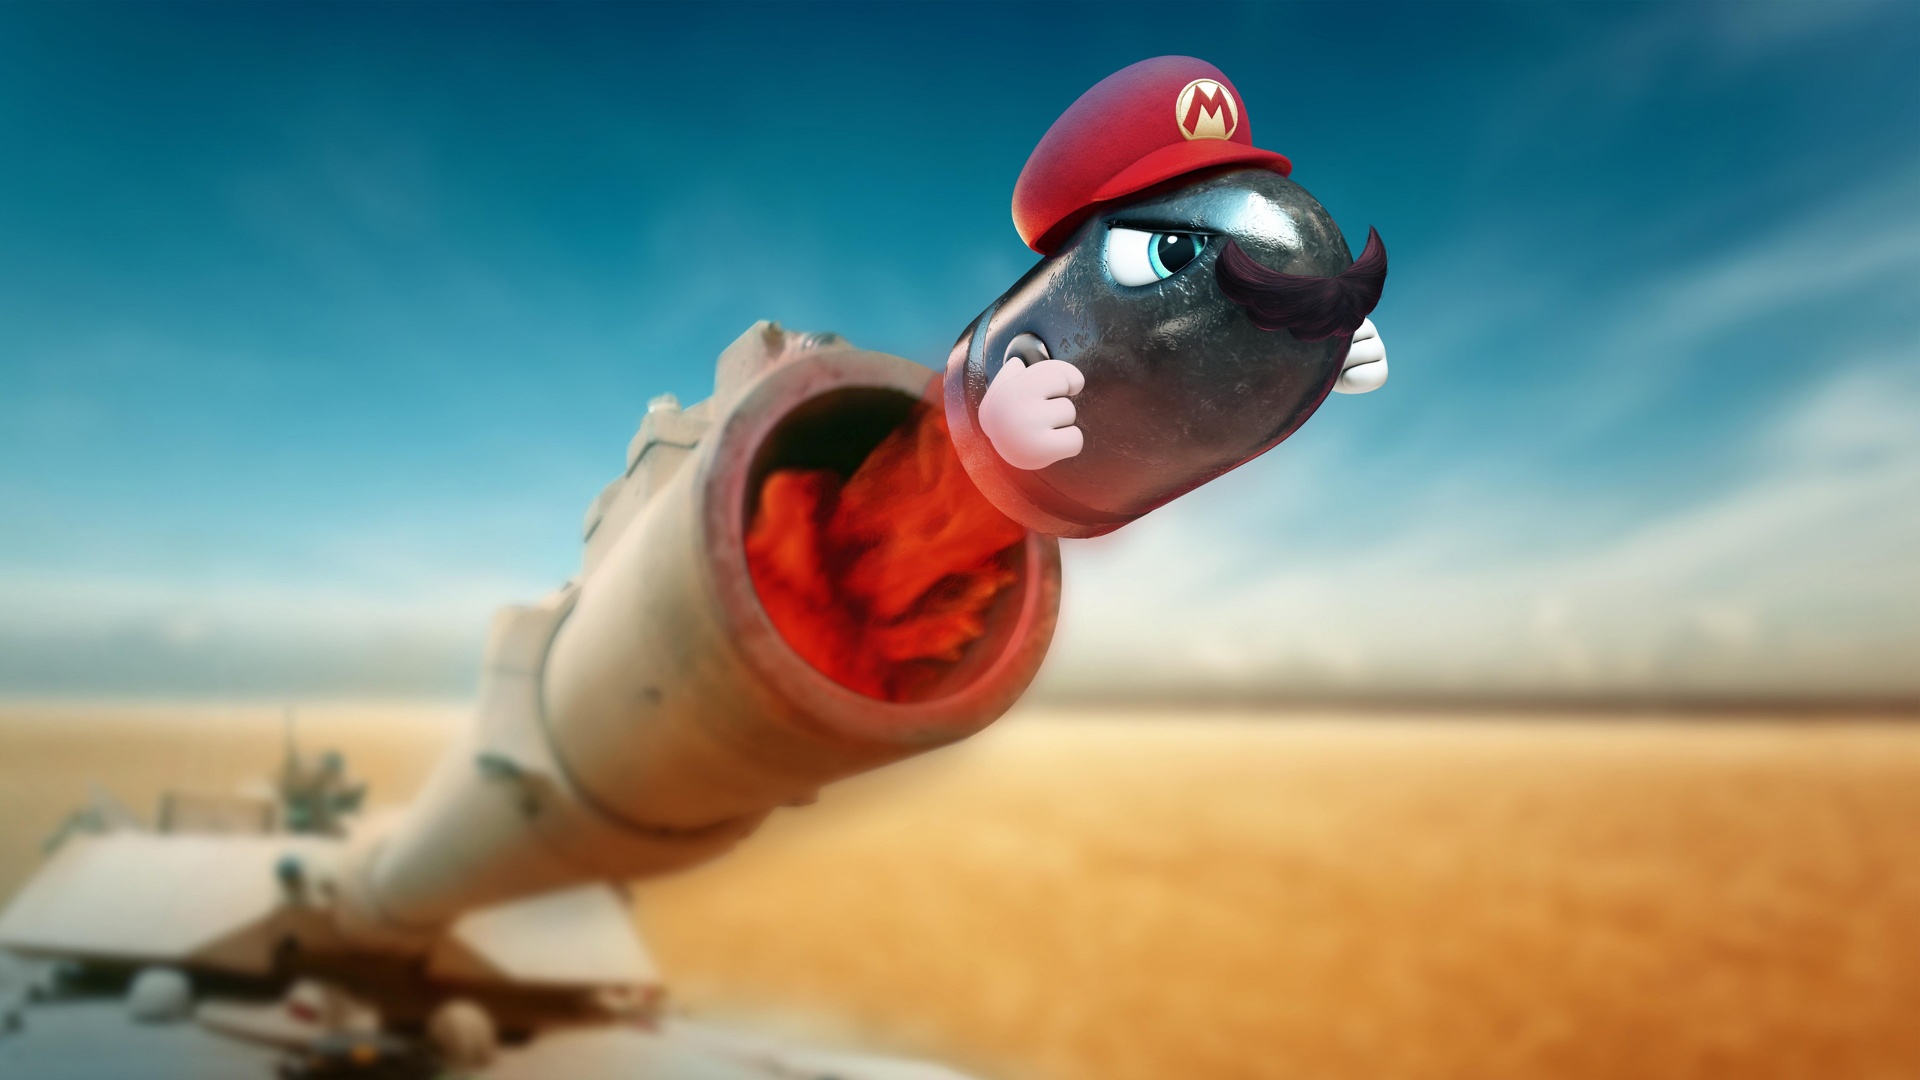 Mario - boulet de canon - fond d'écran.jpg